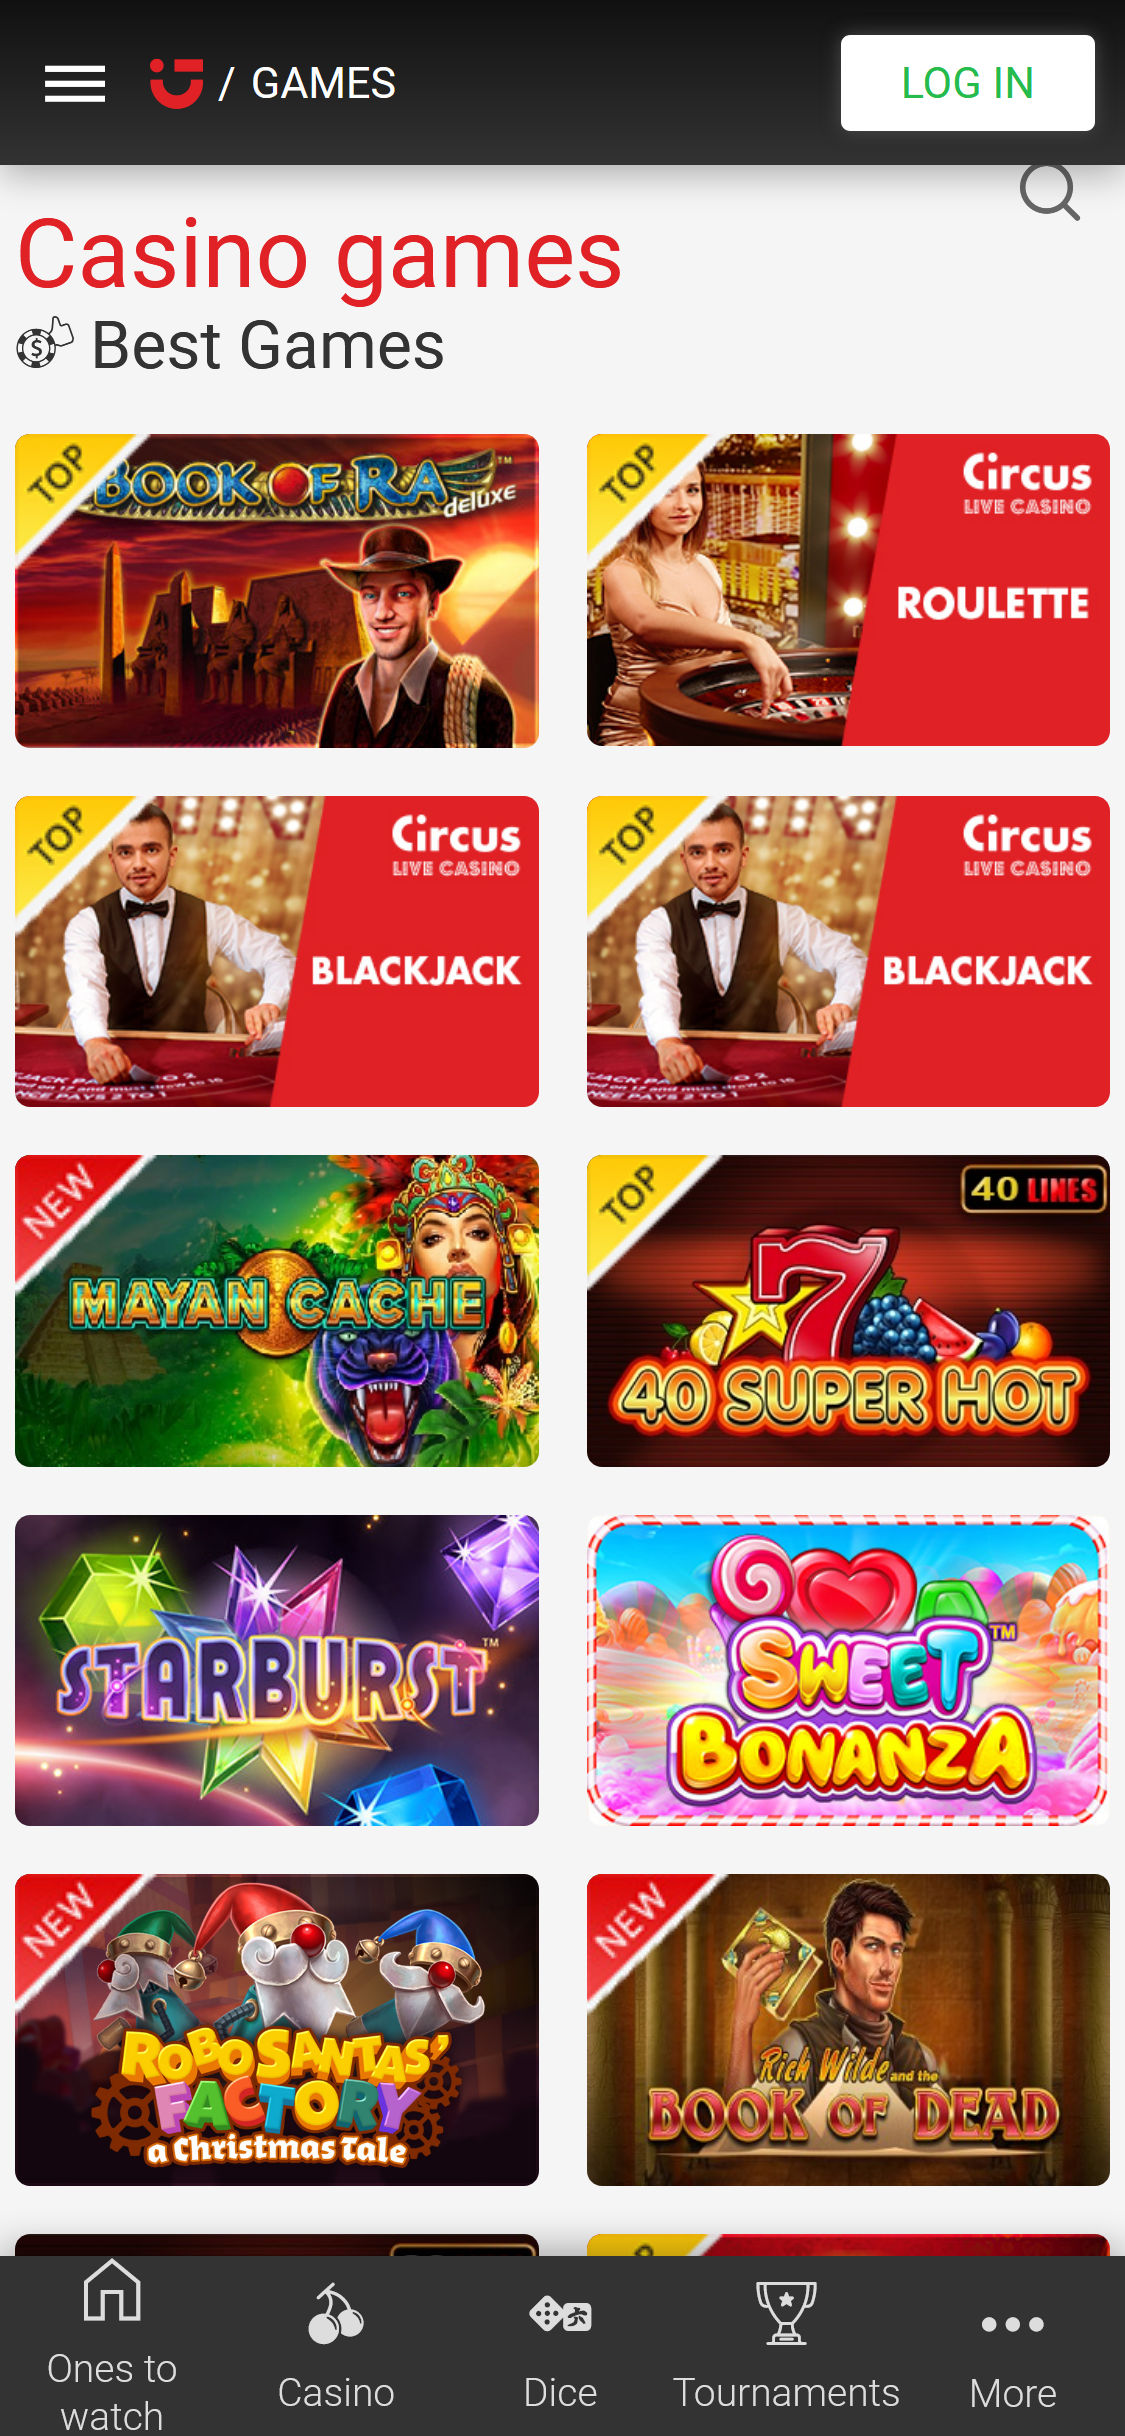 Circus Casino Mobile Games Review